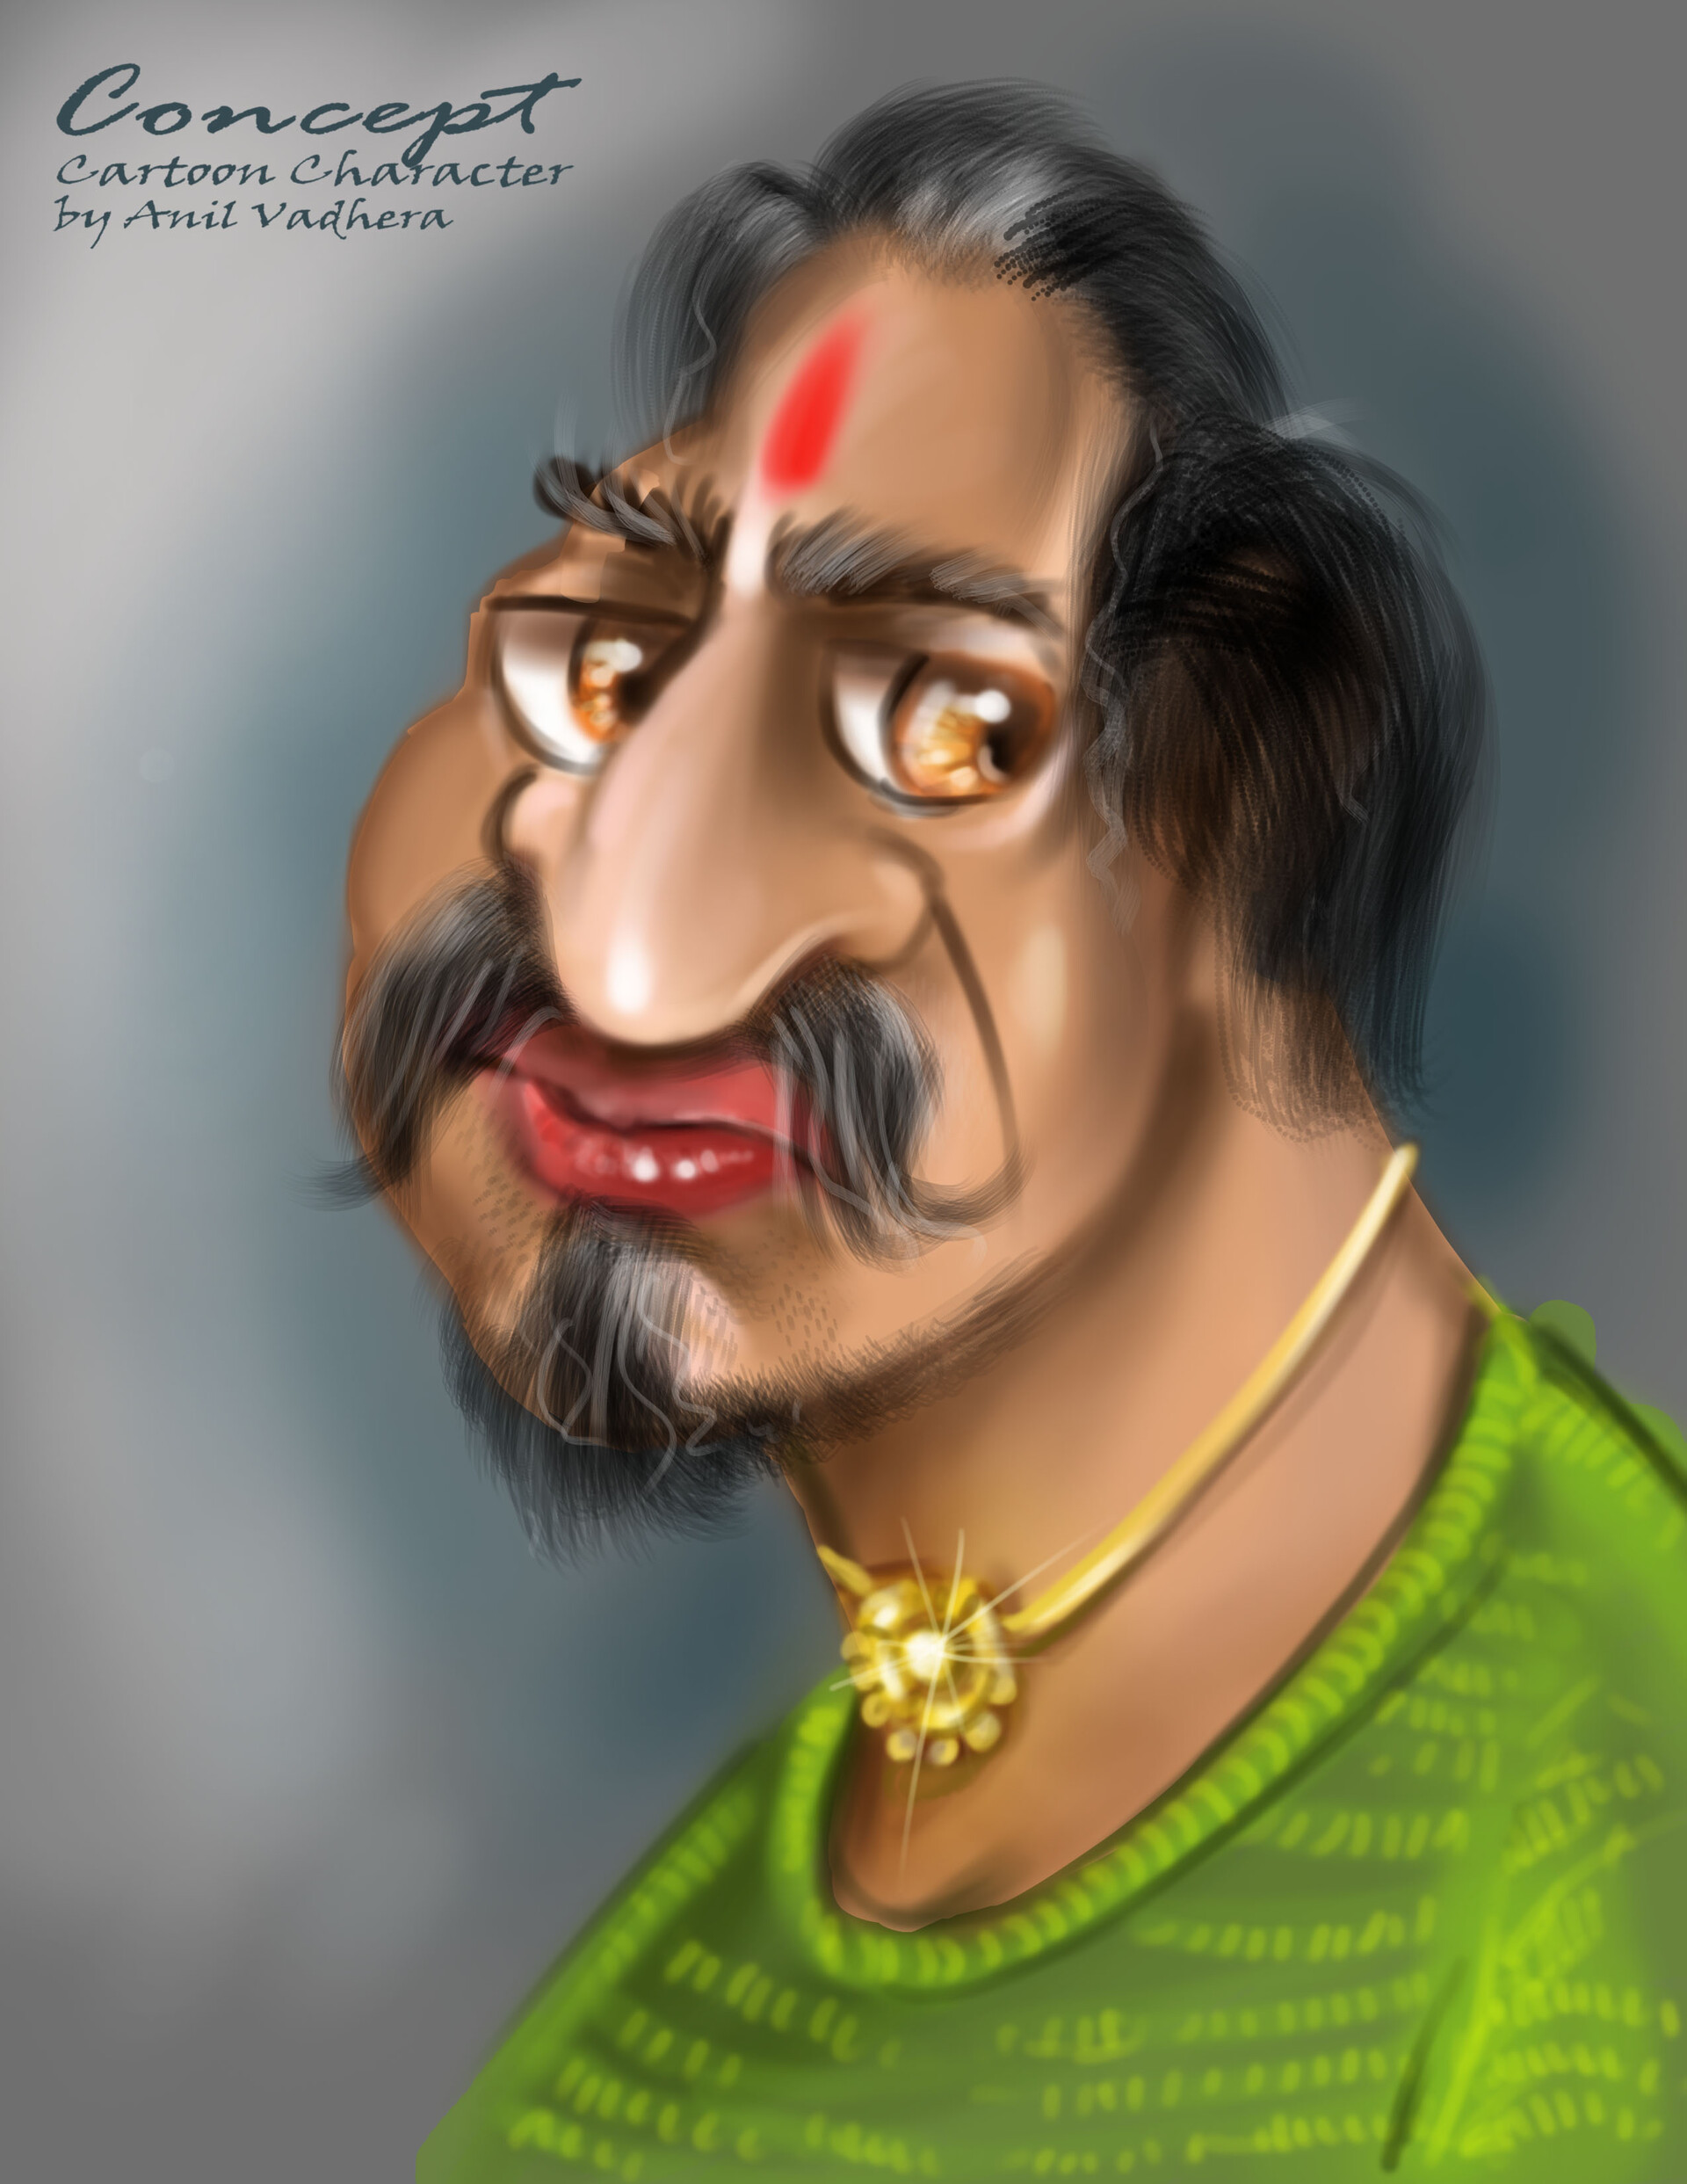 ArtStation - Cartoon character design by Anil Vadhera